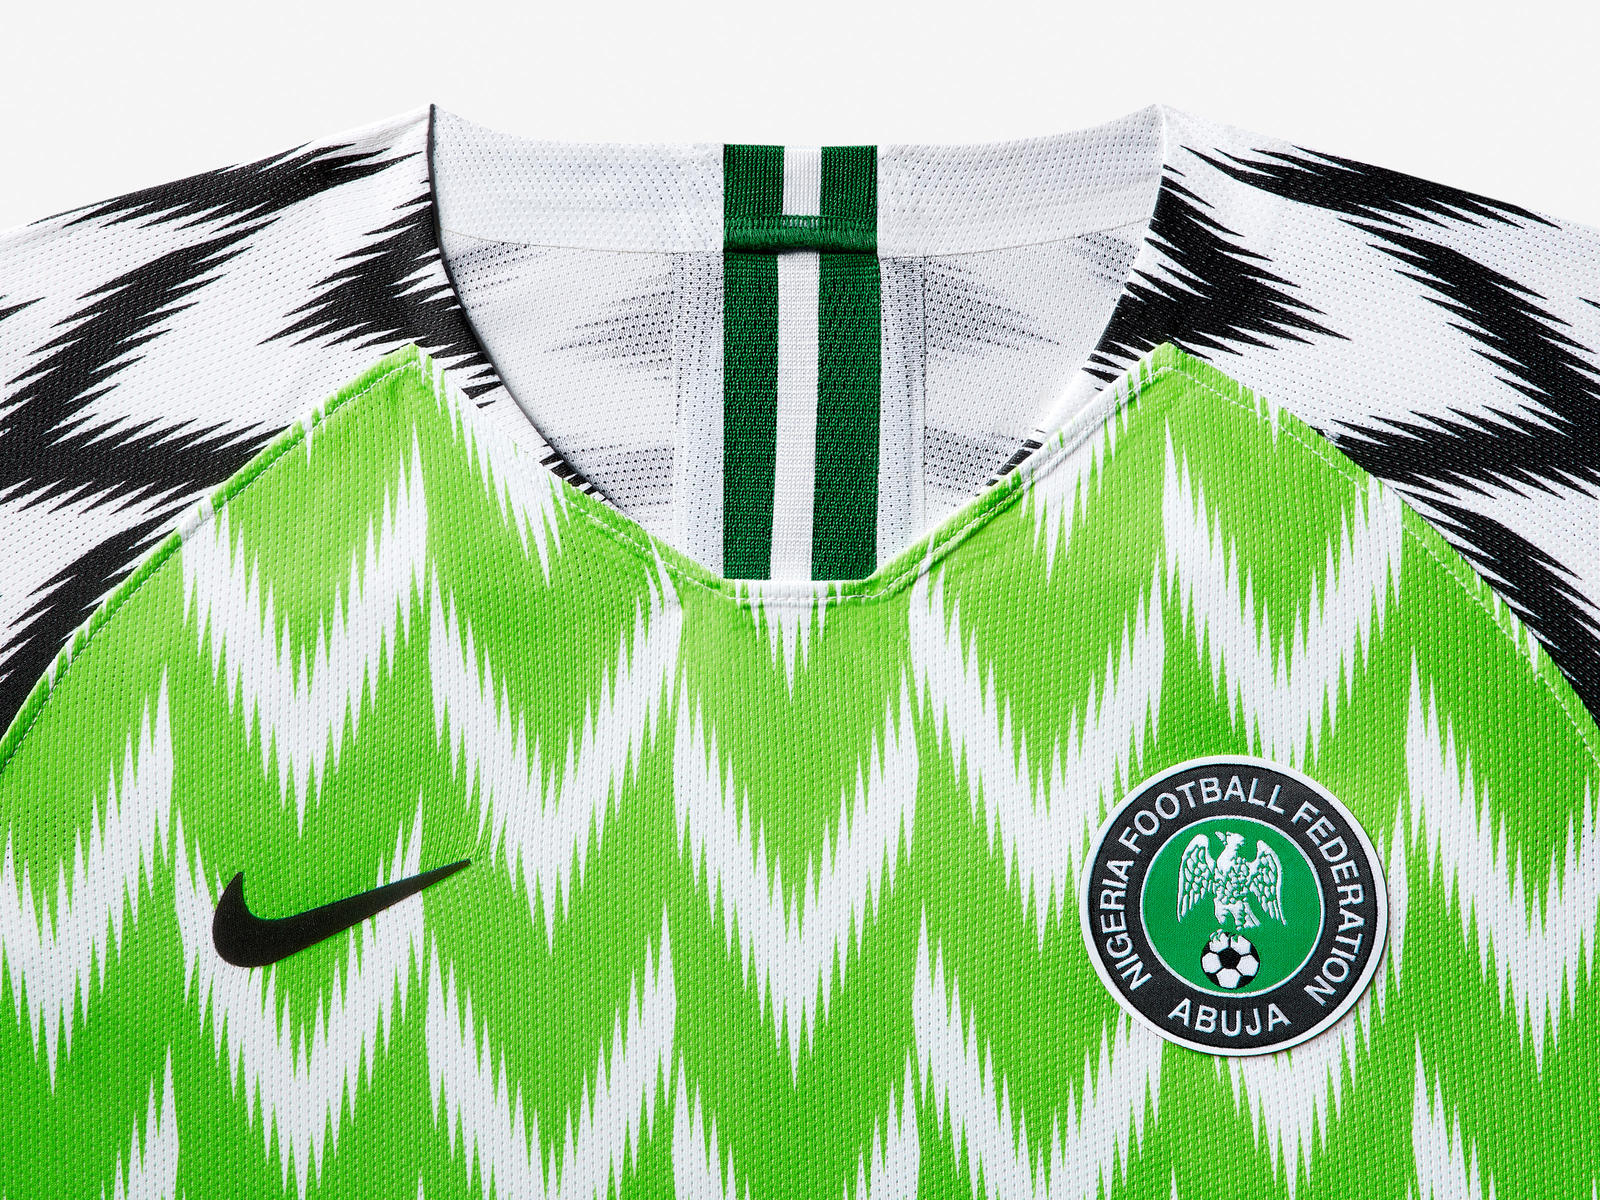 nigeria-national-team-kit-2019-laydown-003_85938.jpg